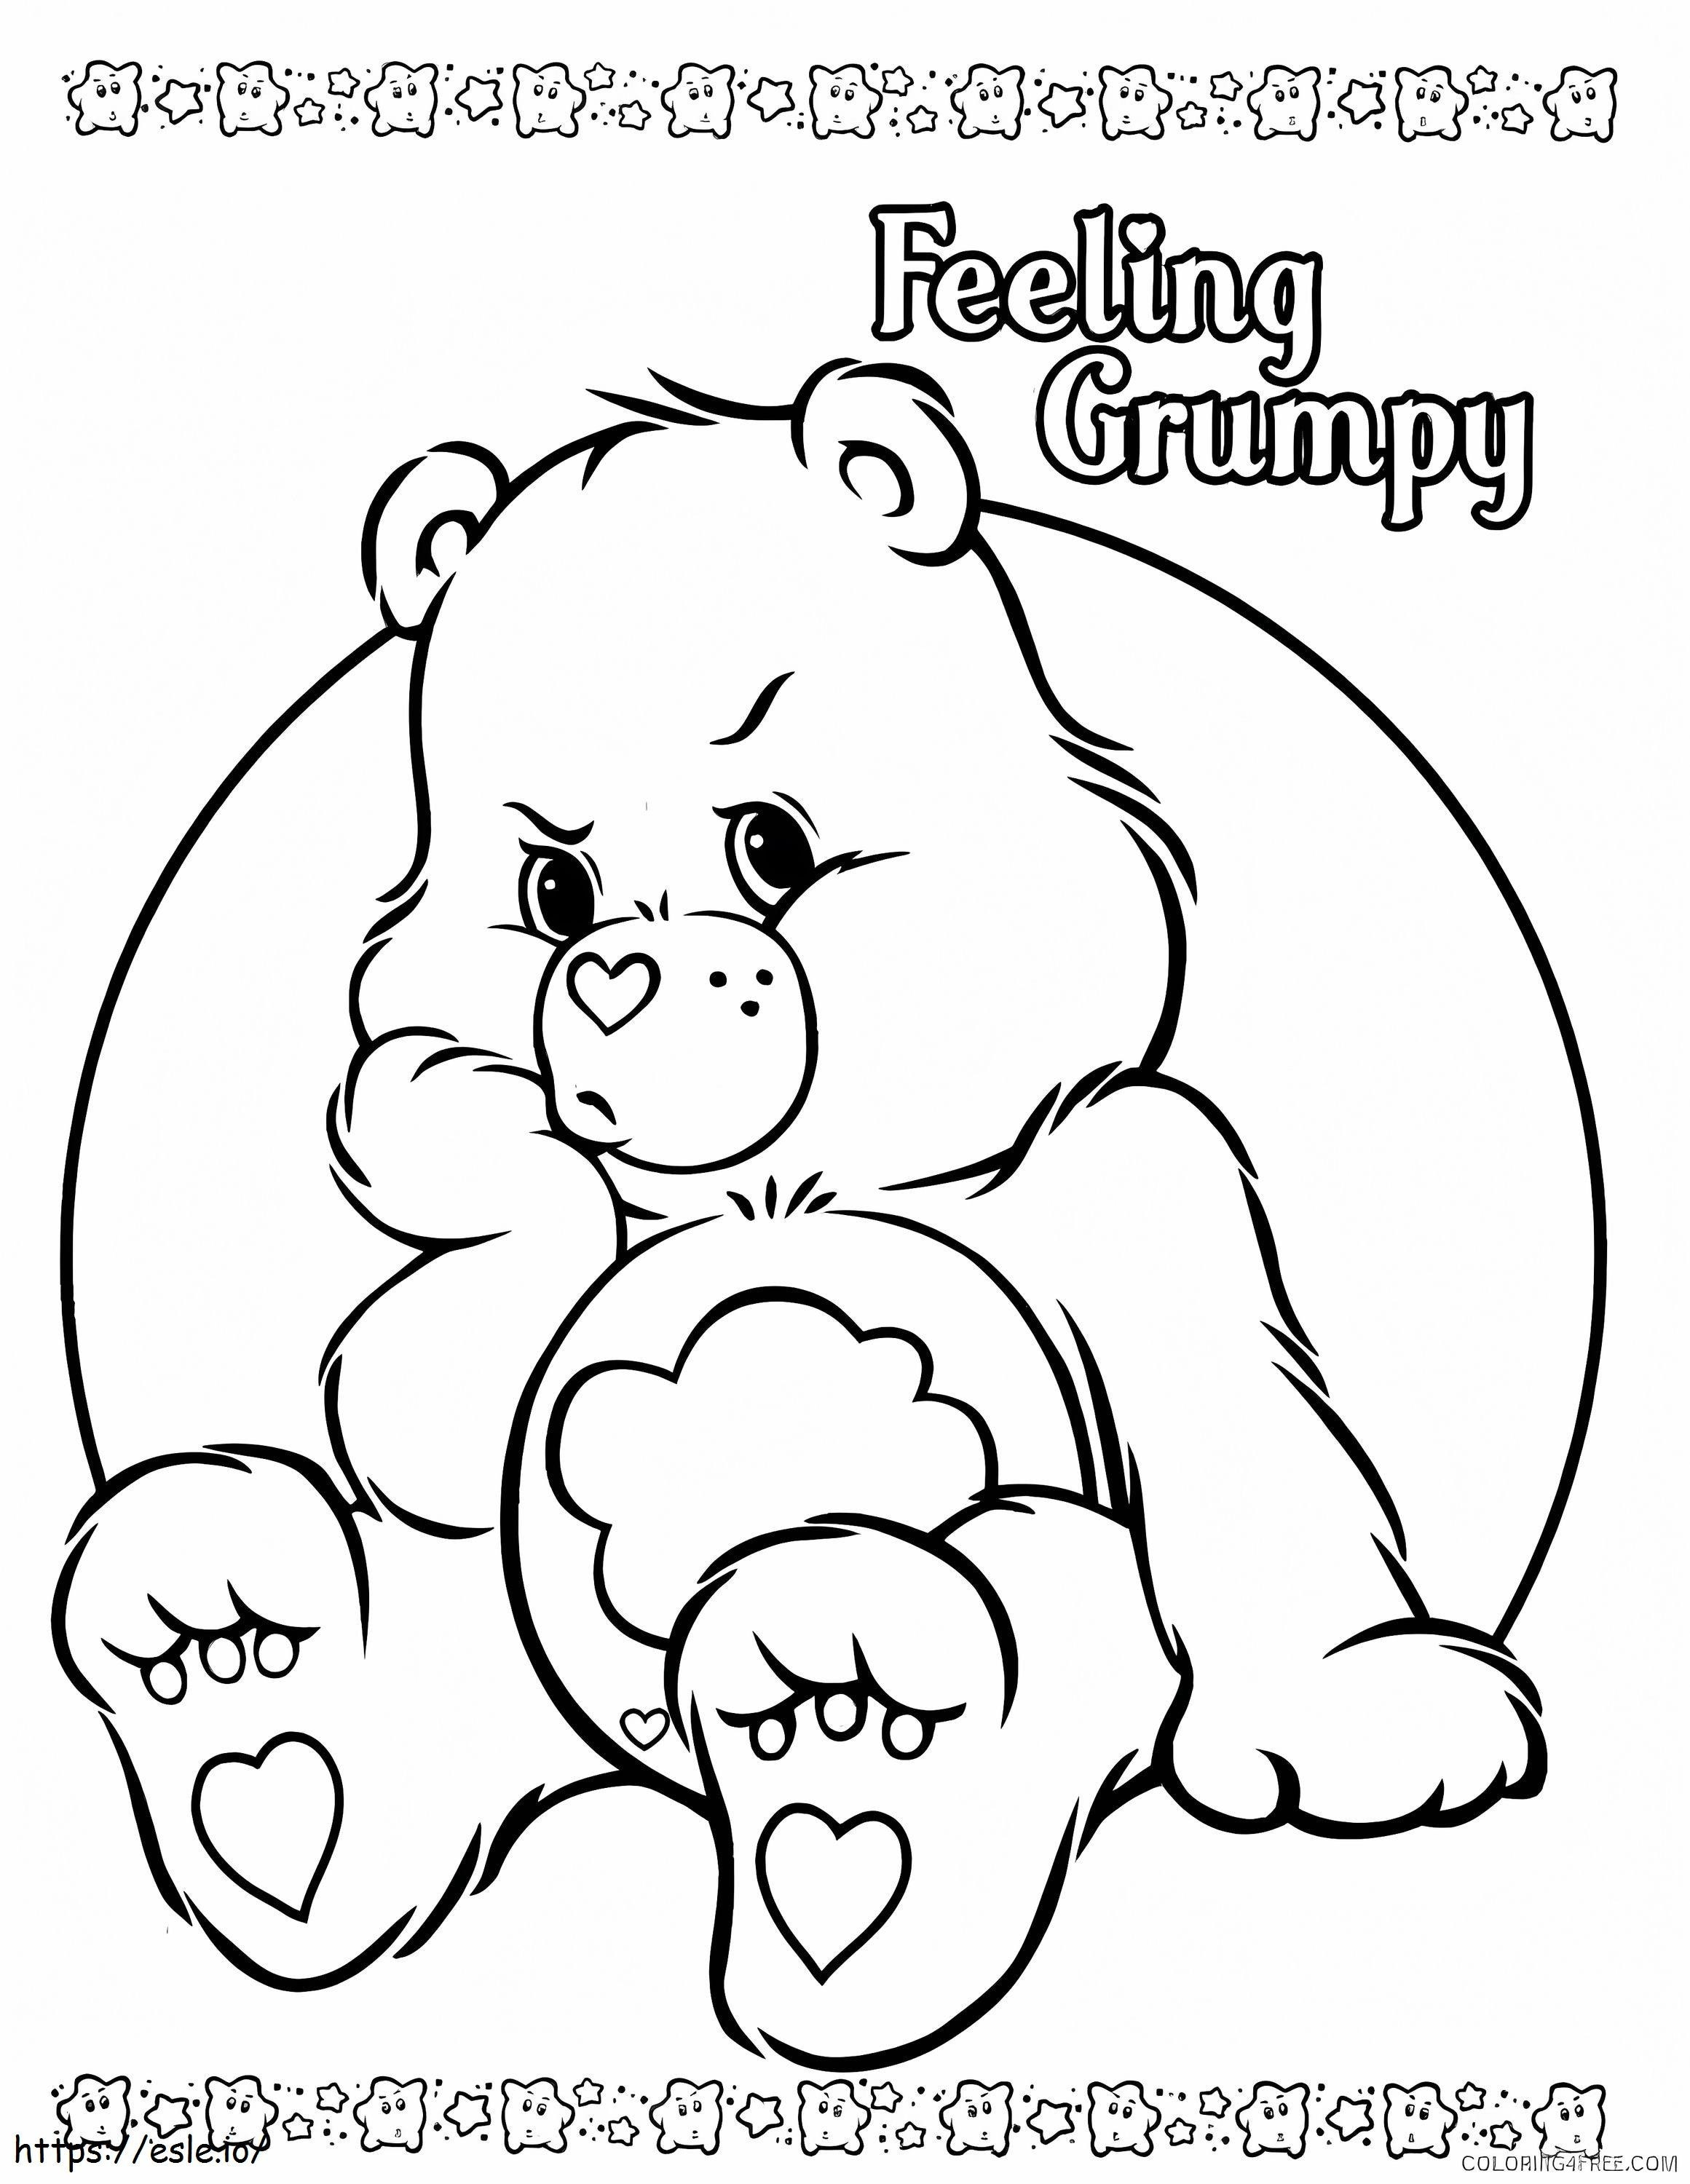 Grumpy Bear 1 coloring page